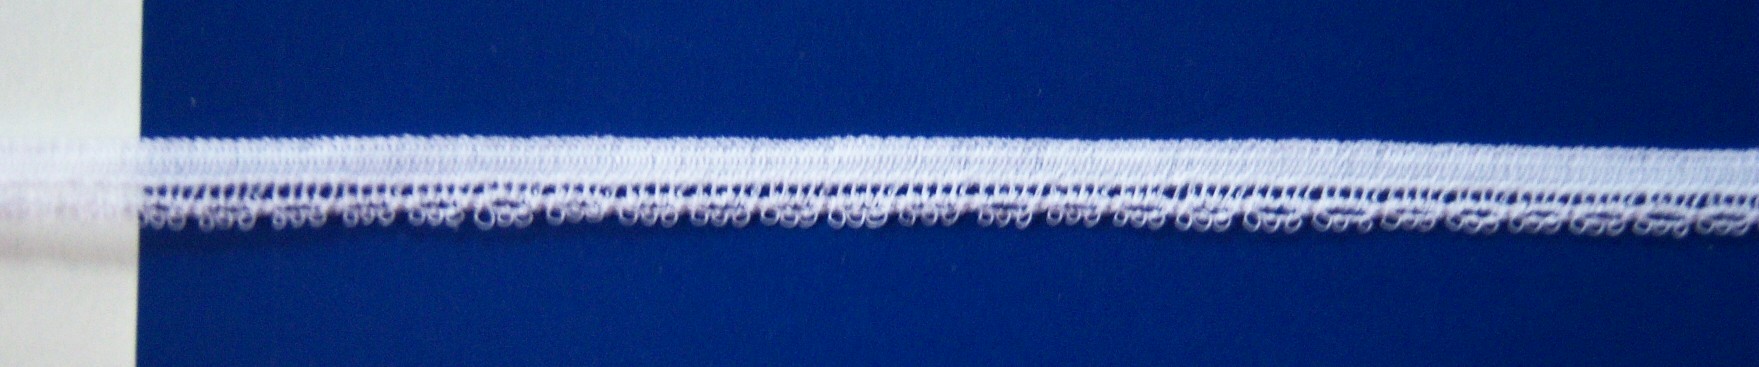 White 1/4" Nylon Lace